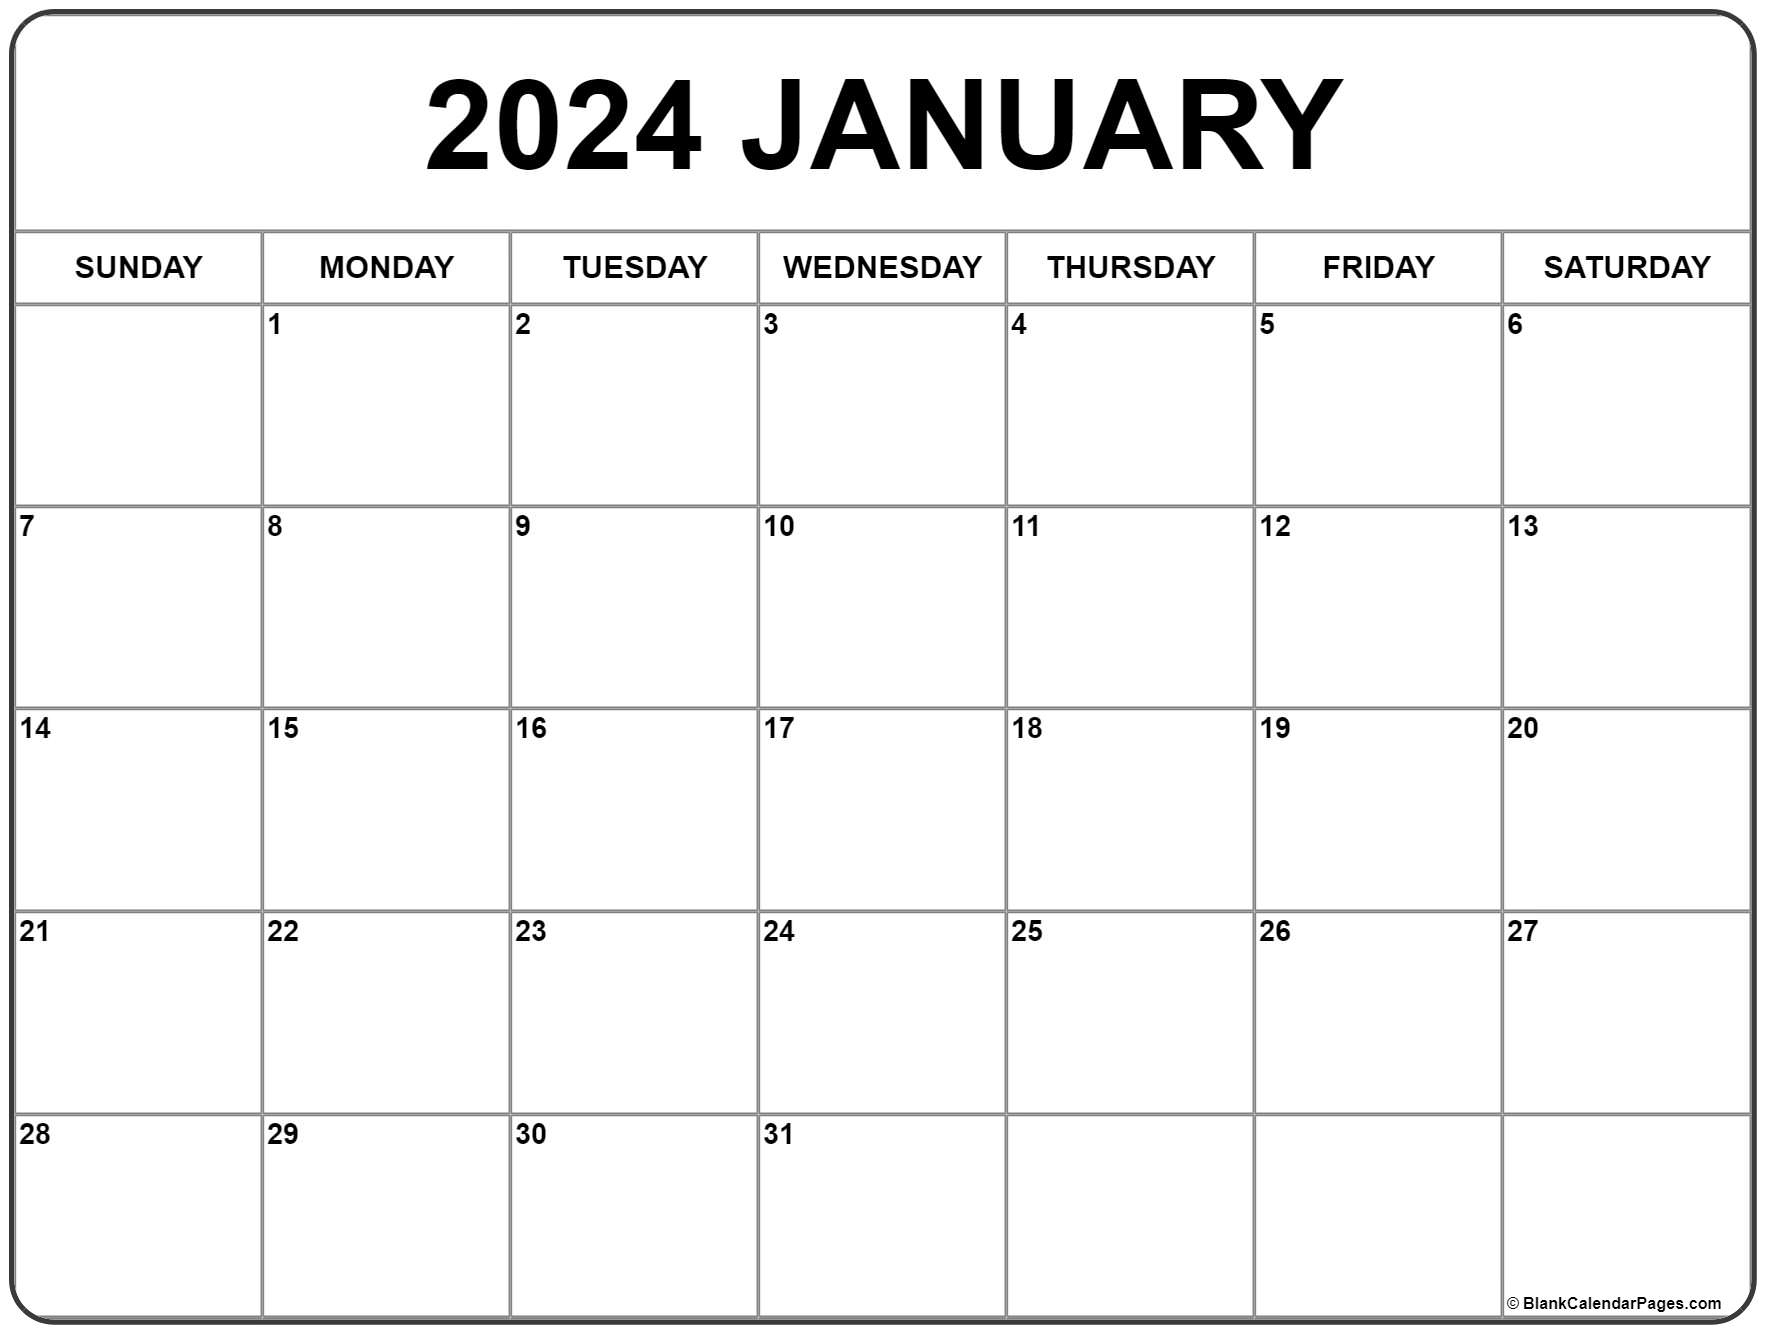 January 2024 Calendar | Free Printable Calendar throughout Free Printable Blank Calendar For 2024